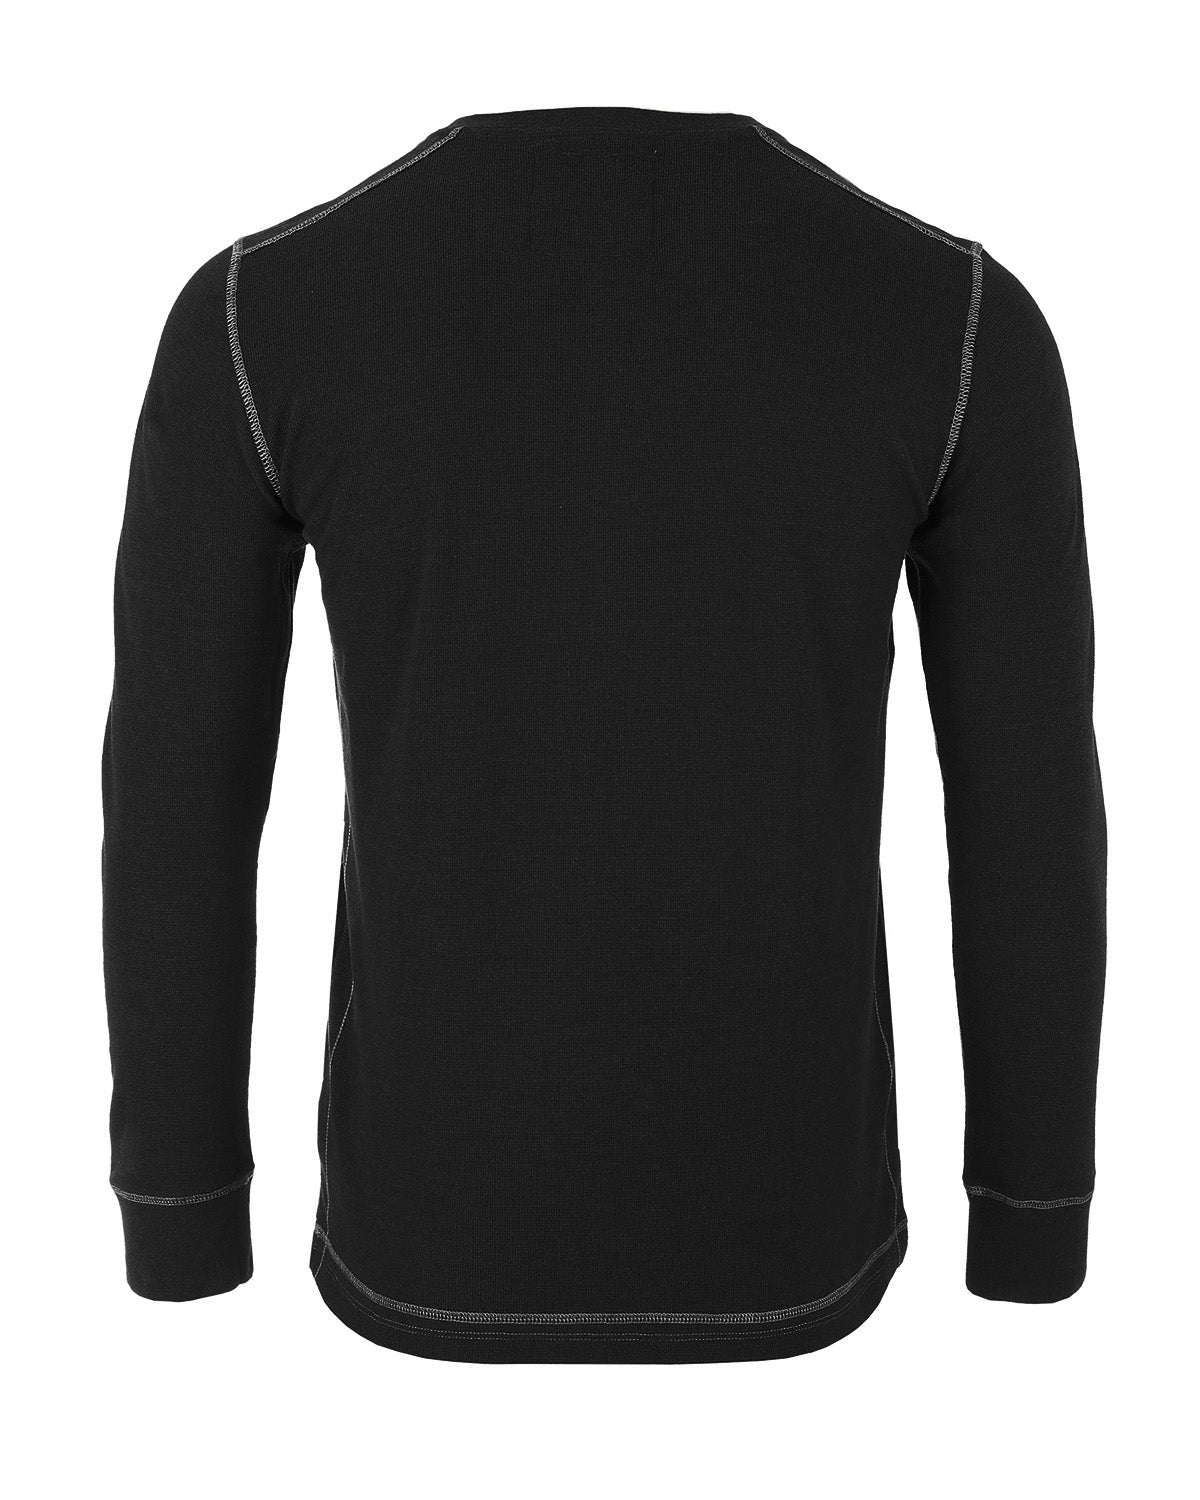 Men's Casual Long Sleeve Lightweight Thermal Henley Essential Shirt